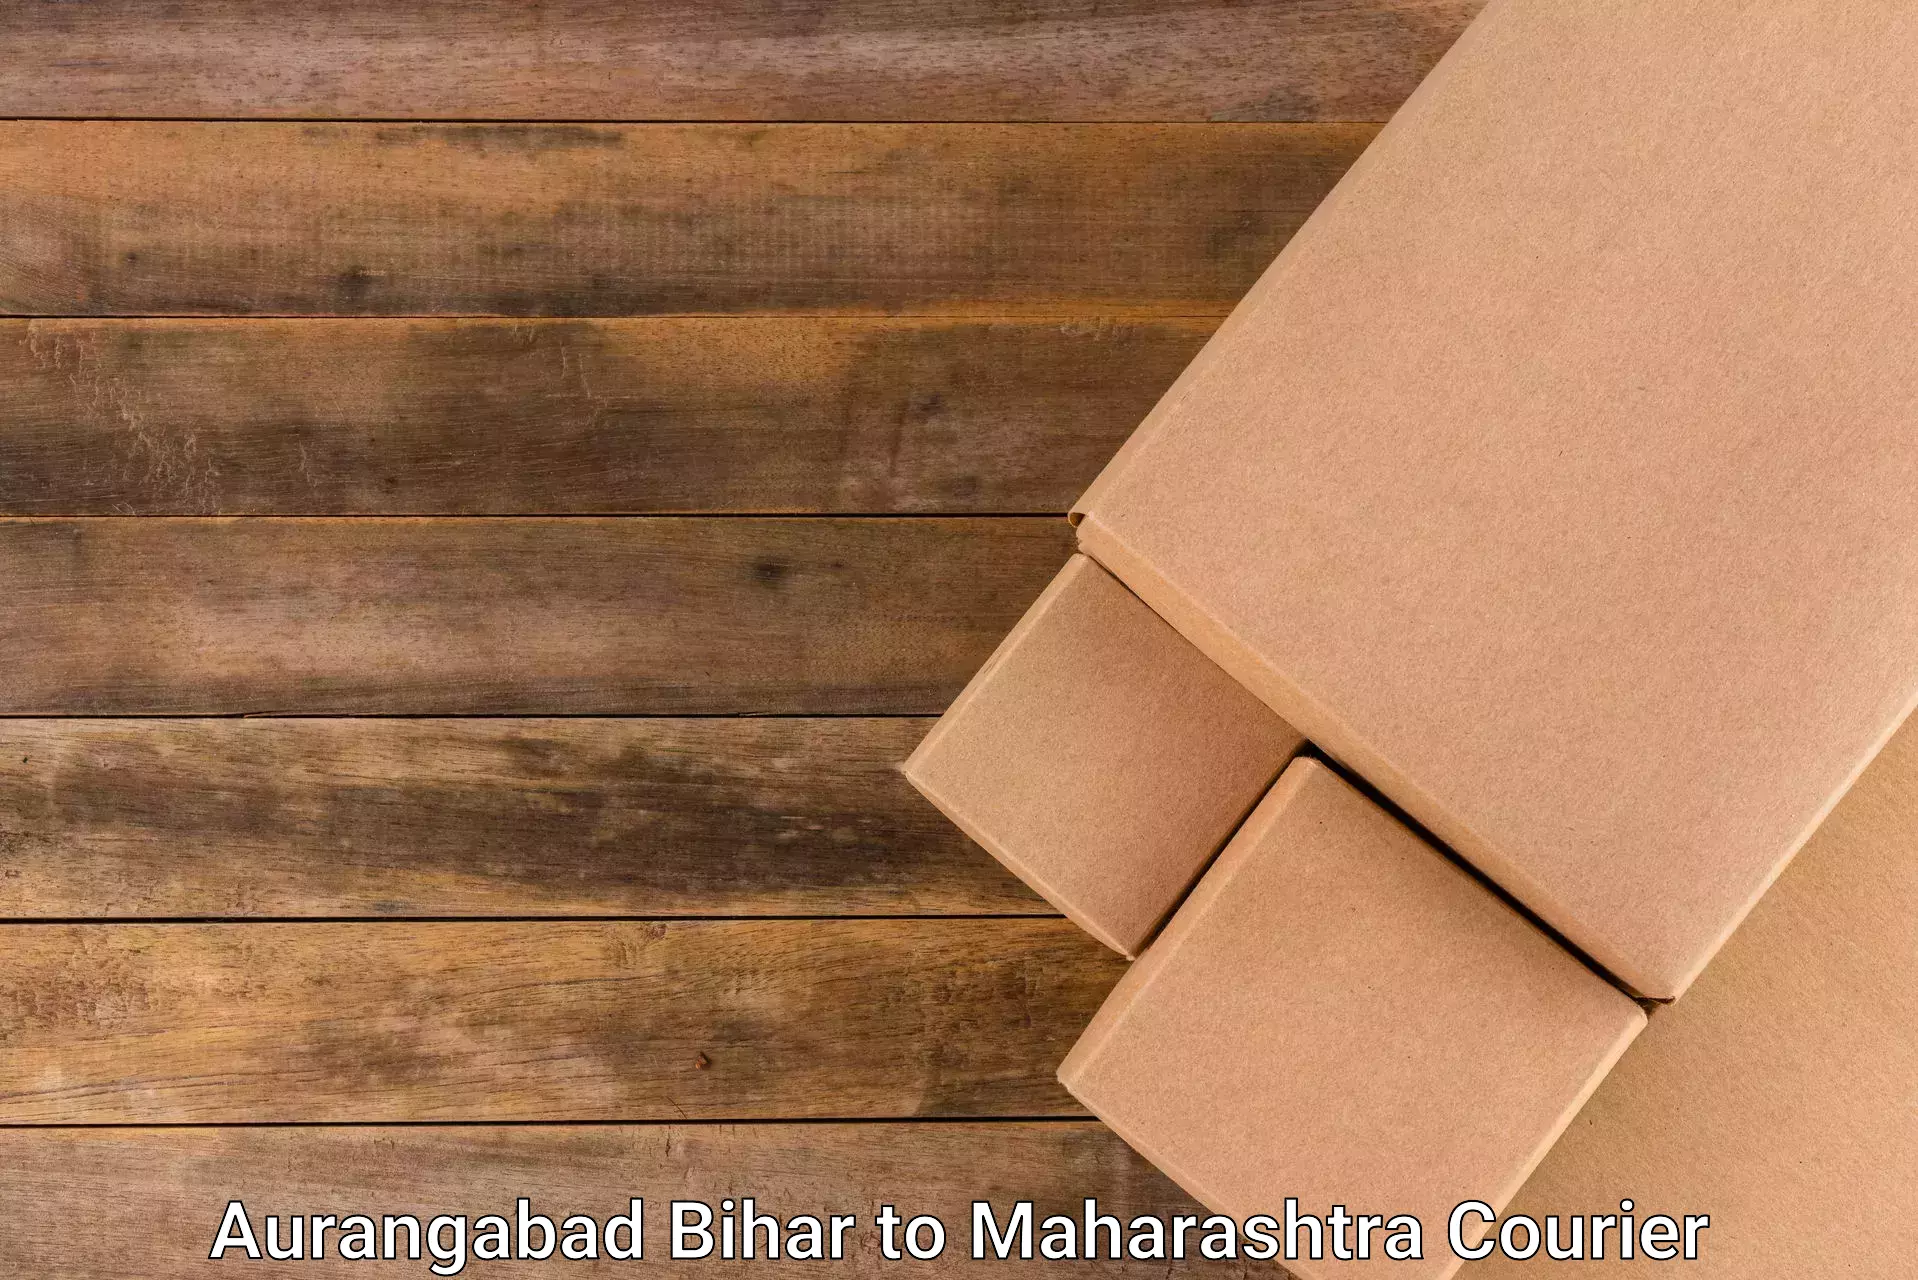 Express courier facilities Aurangabad Bihar to Sillod